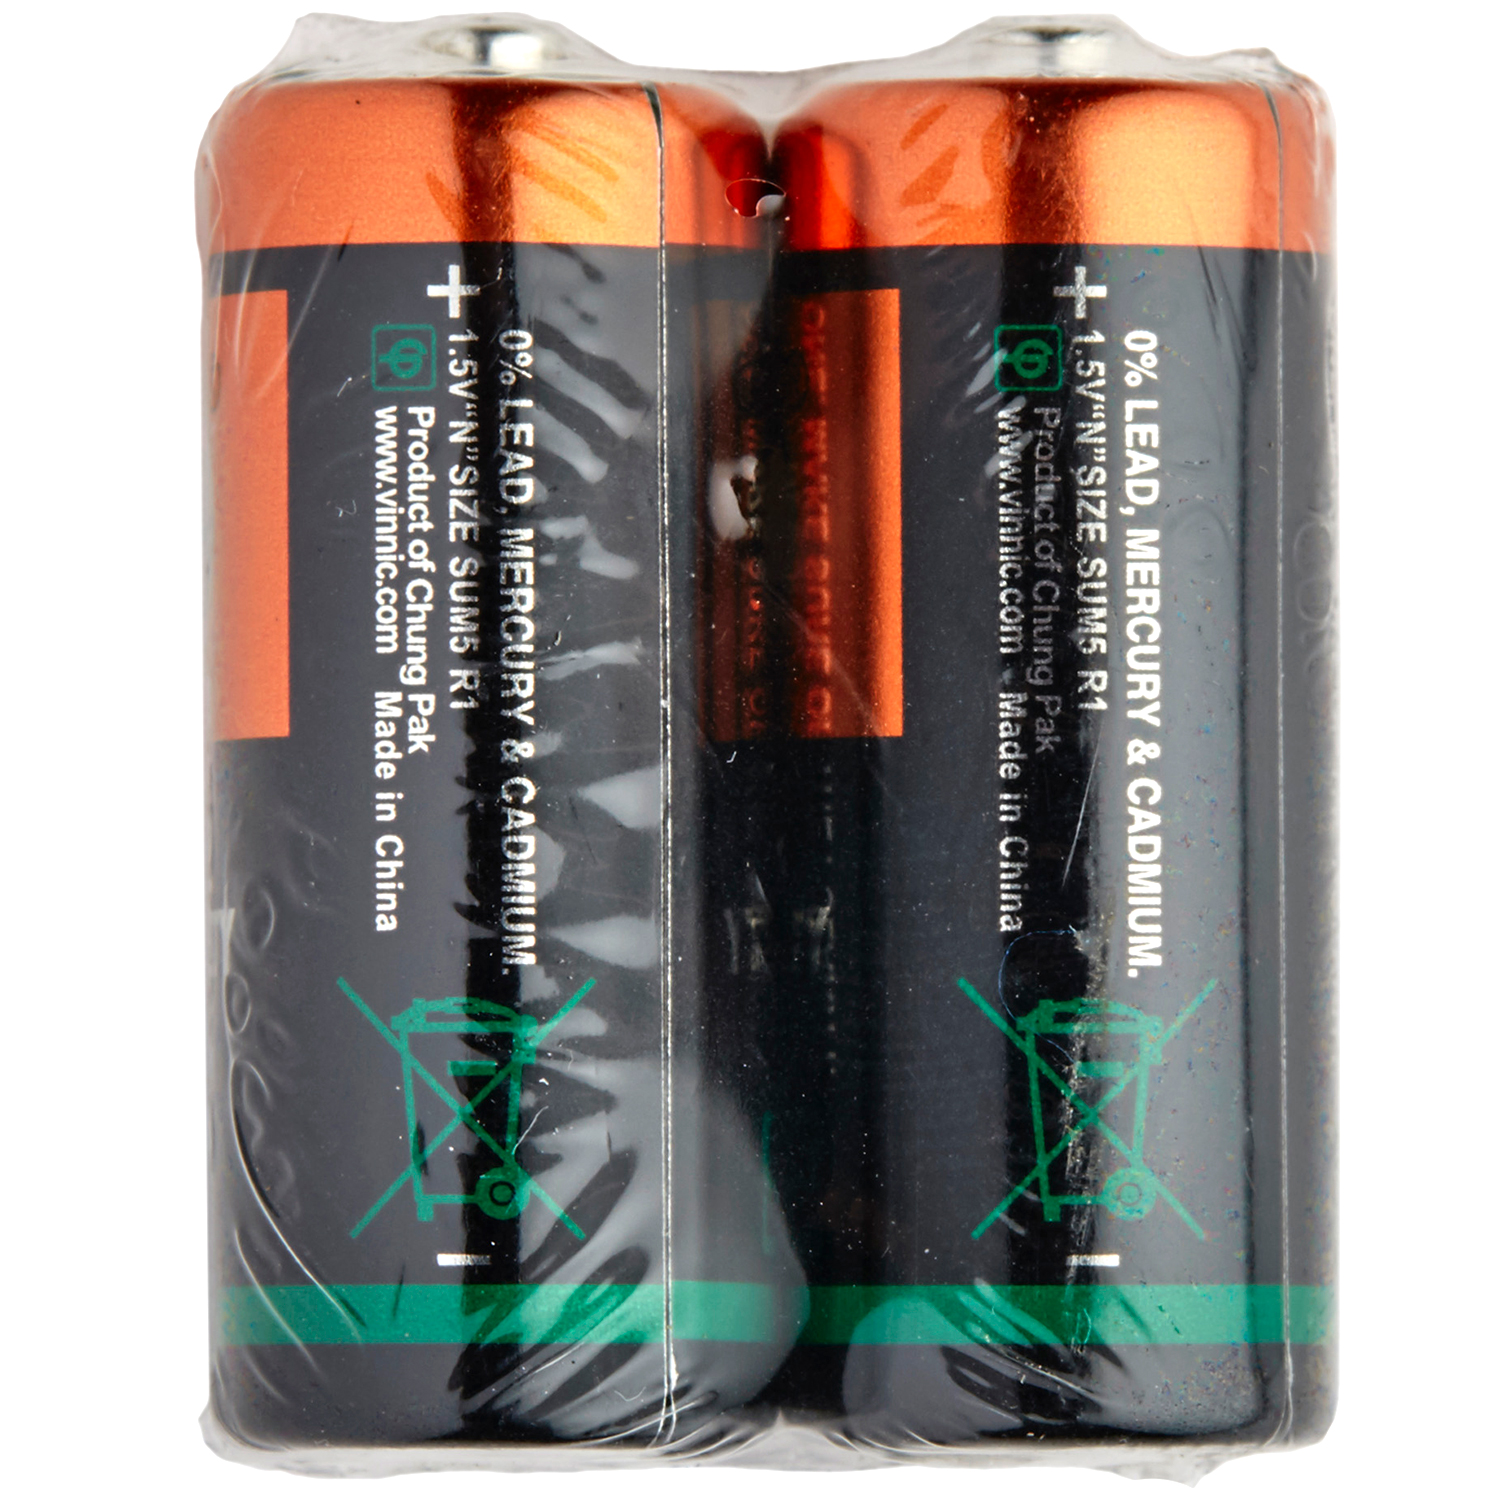 Sum5, LR1 Batteri 2 stk - Batterier